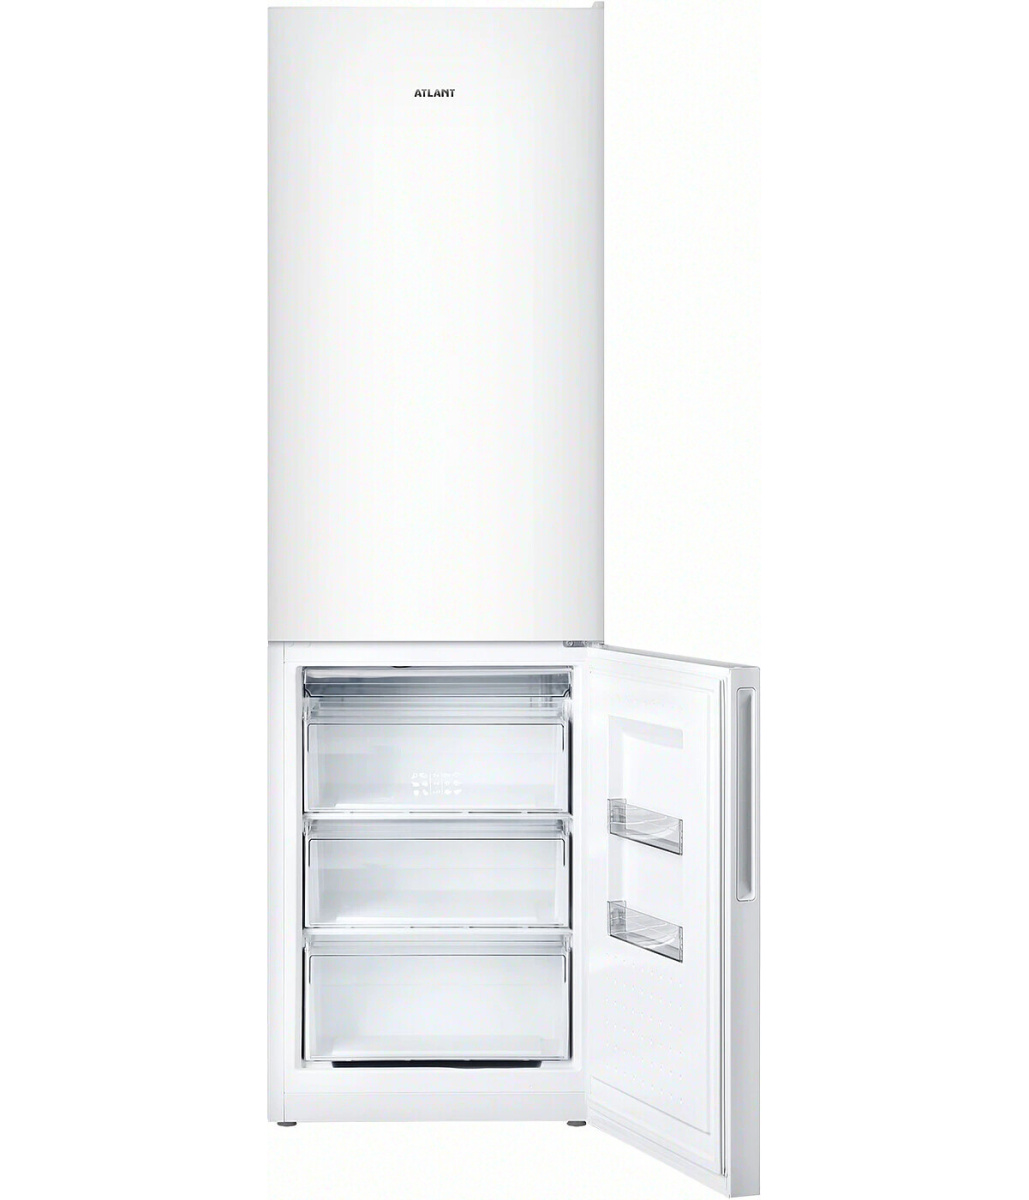 Холодильник атлант h. Холодильник Атлант 4625-101. ATLANT хм 4625-101. Холодильник ATLANT хм-4621-101. Холодильник ATLANT хм 4619-100.